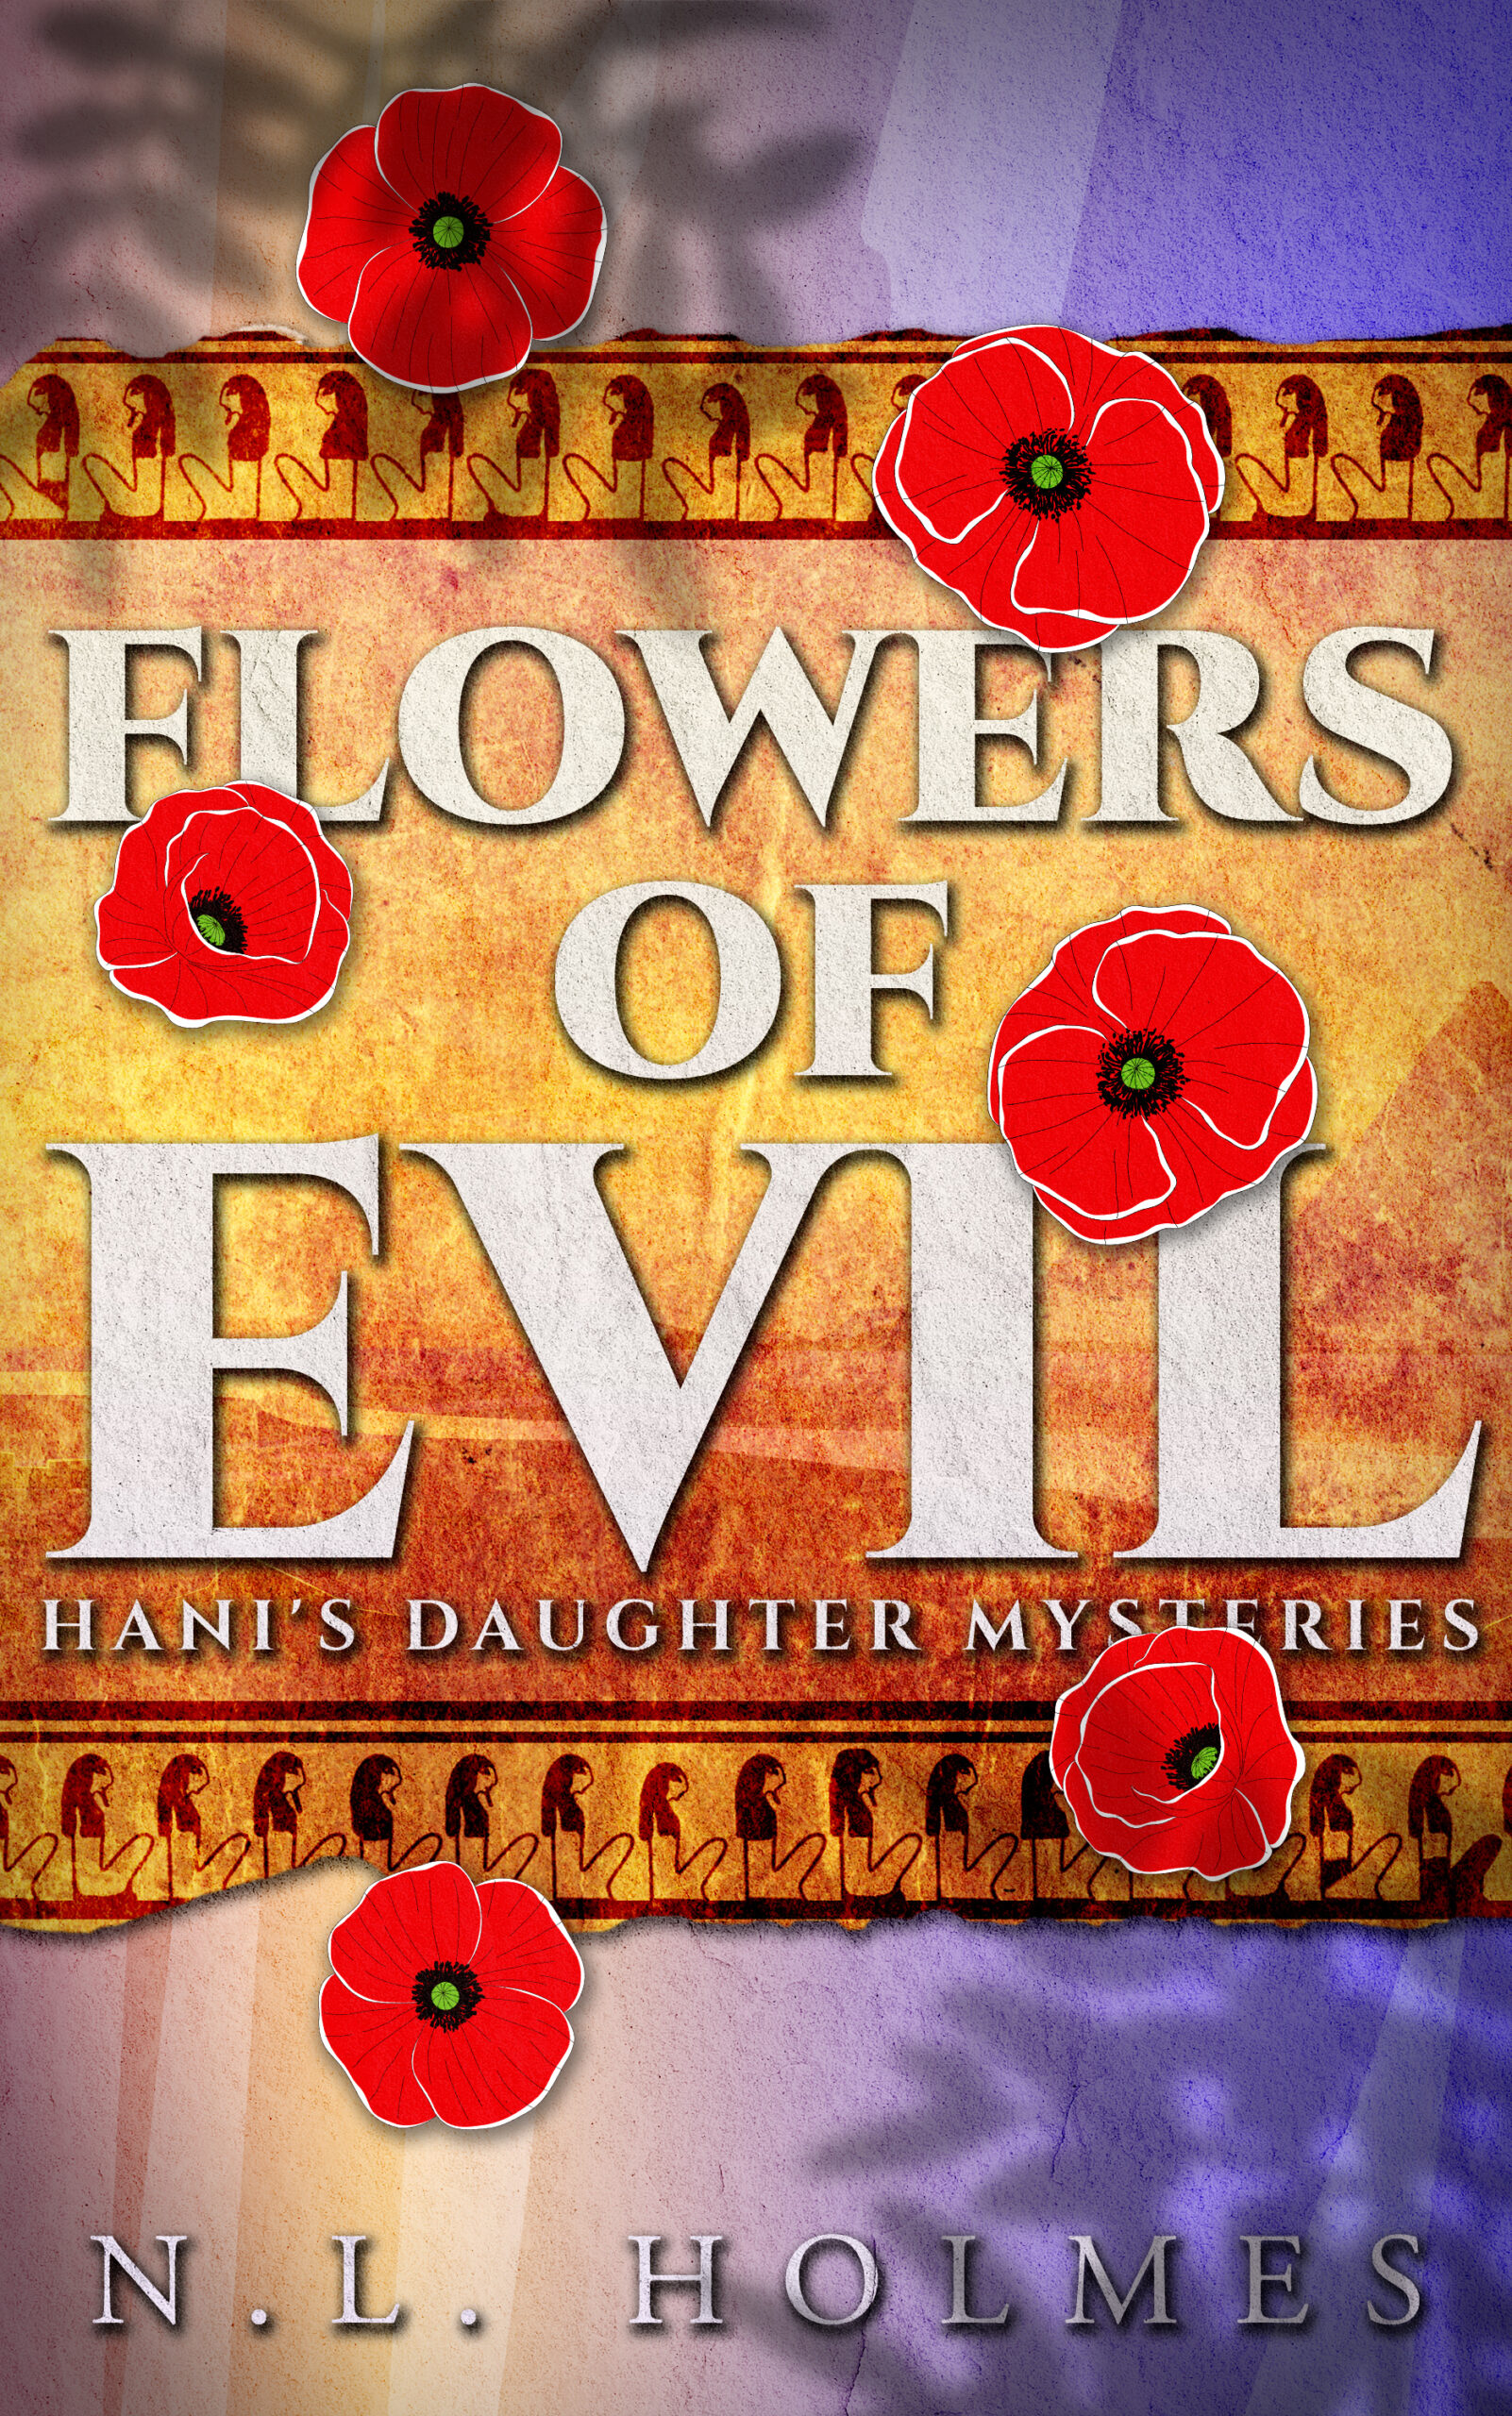 Flowers of Evil by N.L. Holmes